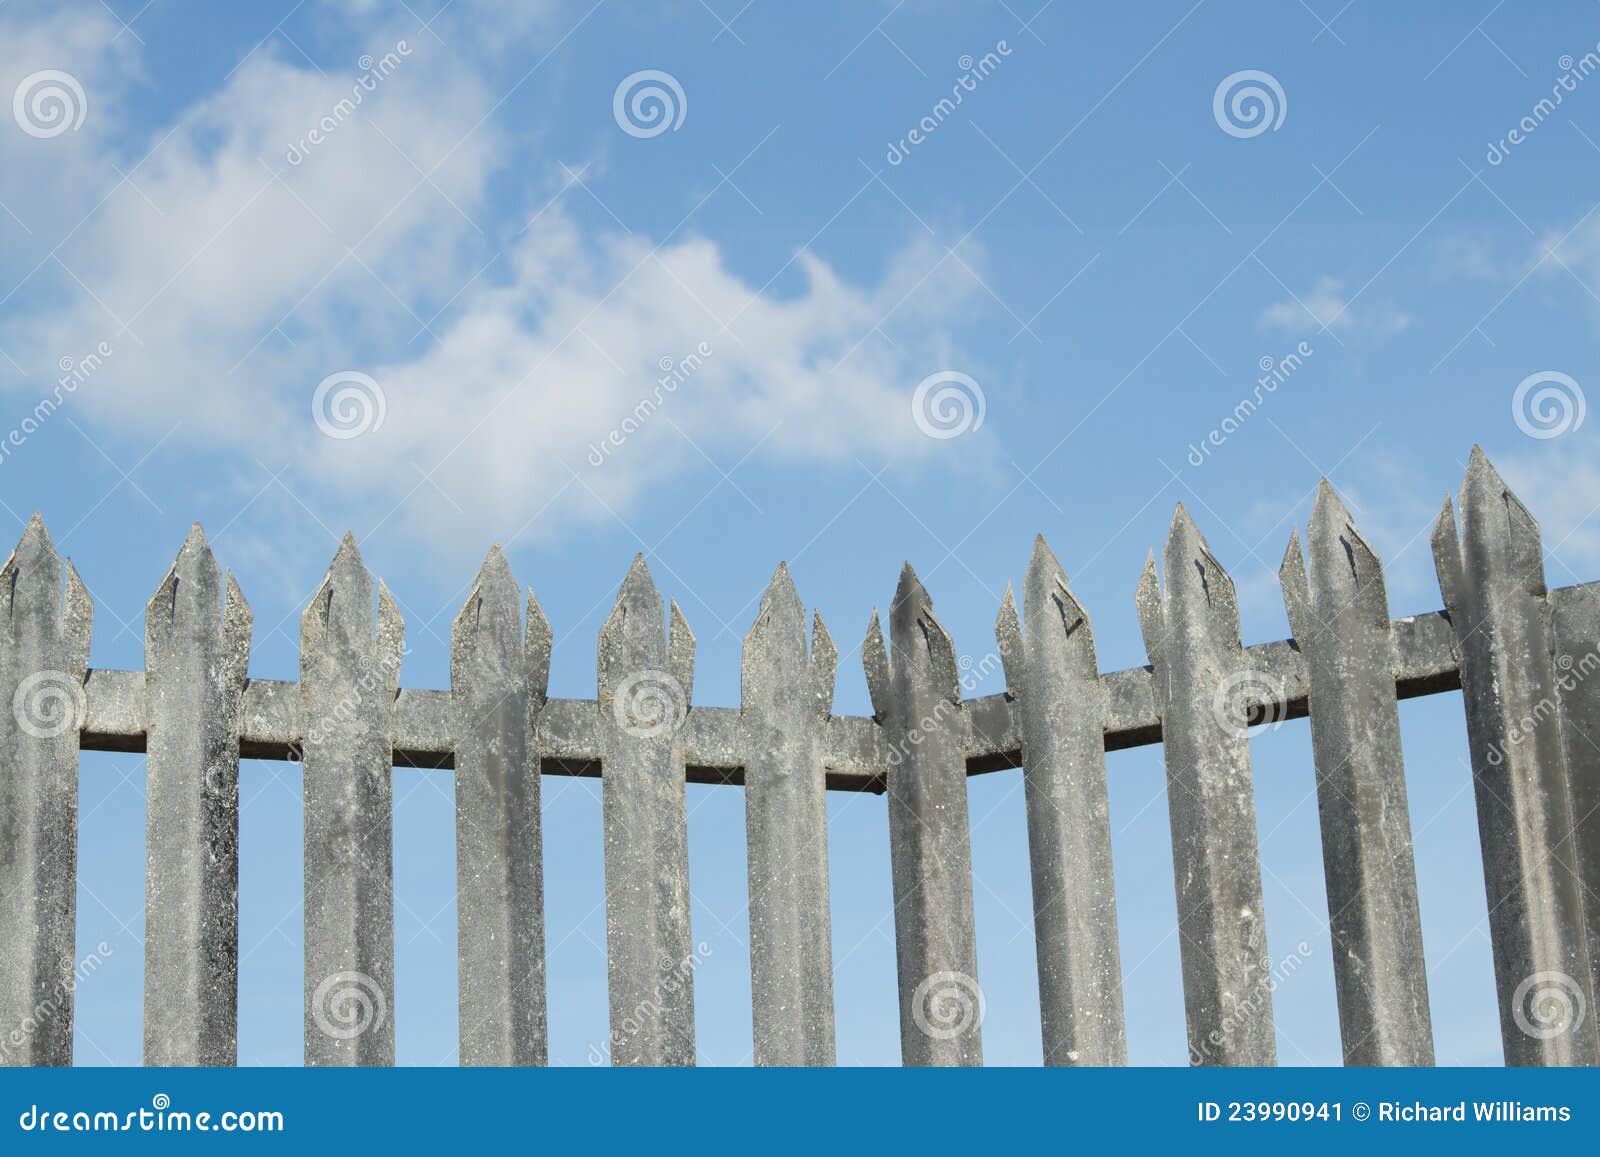 Spike fence. stock image. Image of blue, railing, posts - 23990941
